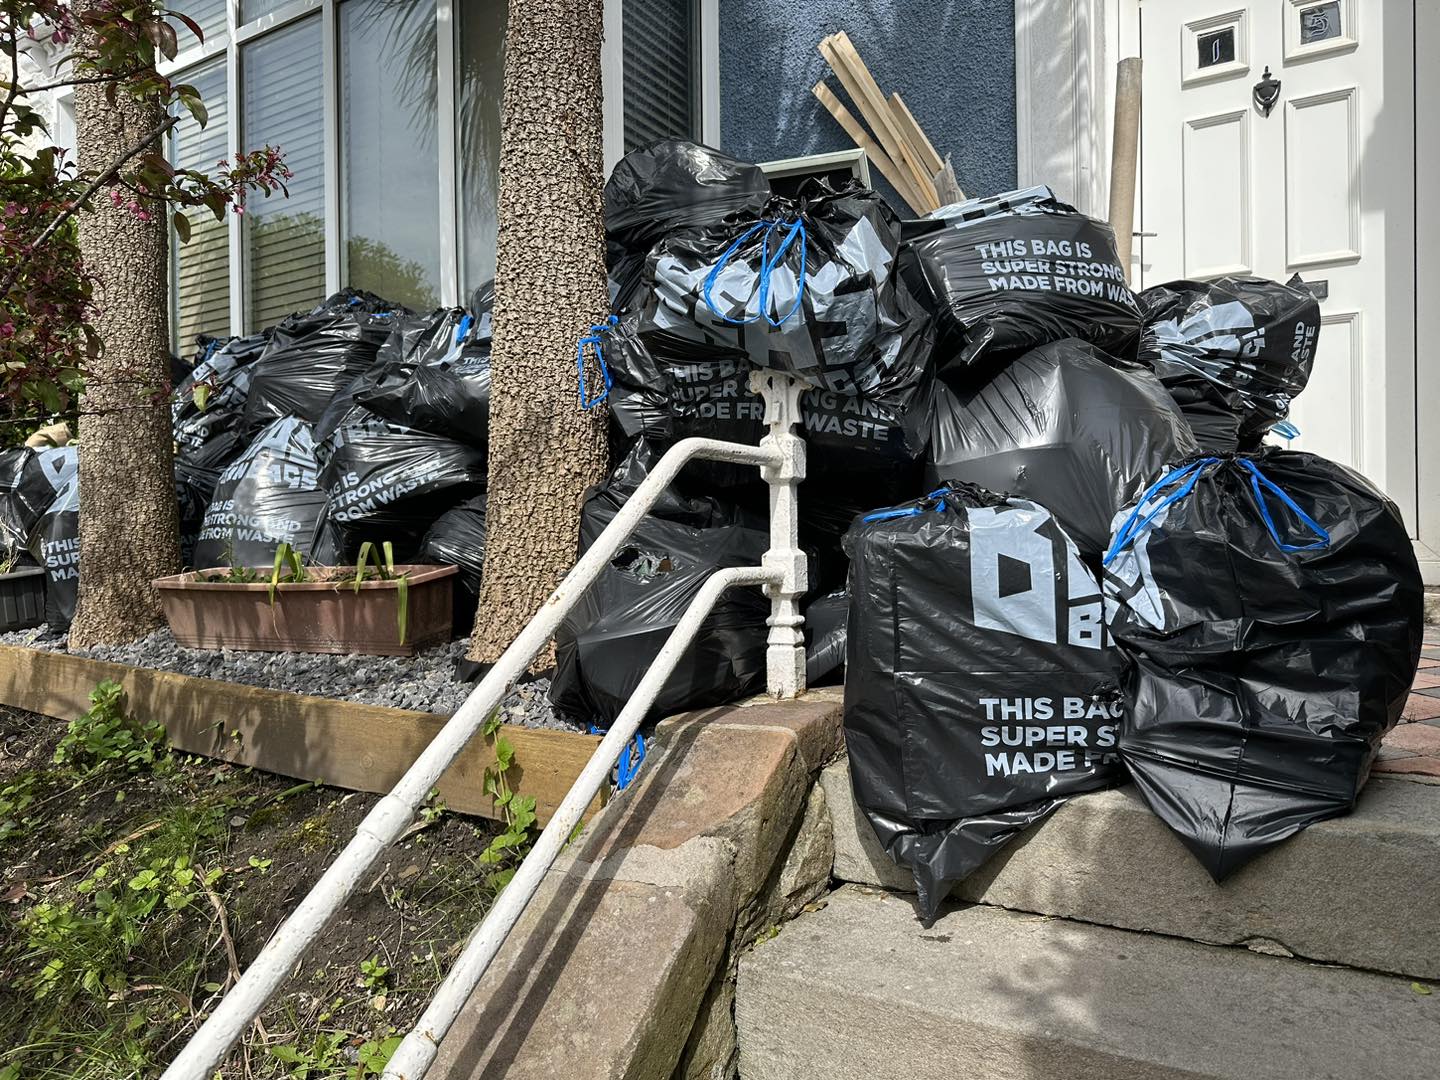 A photo of rubbish bags on garden floor